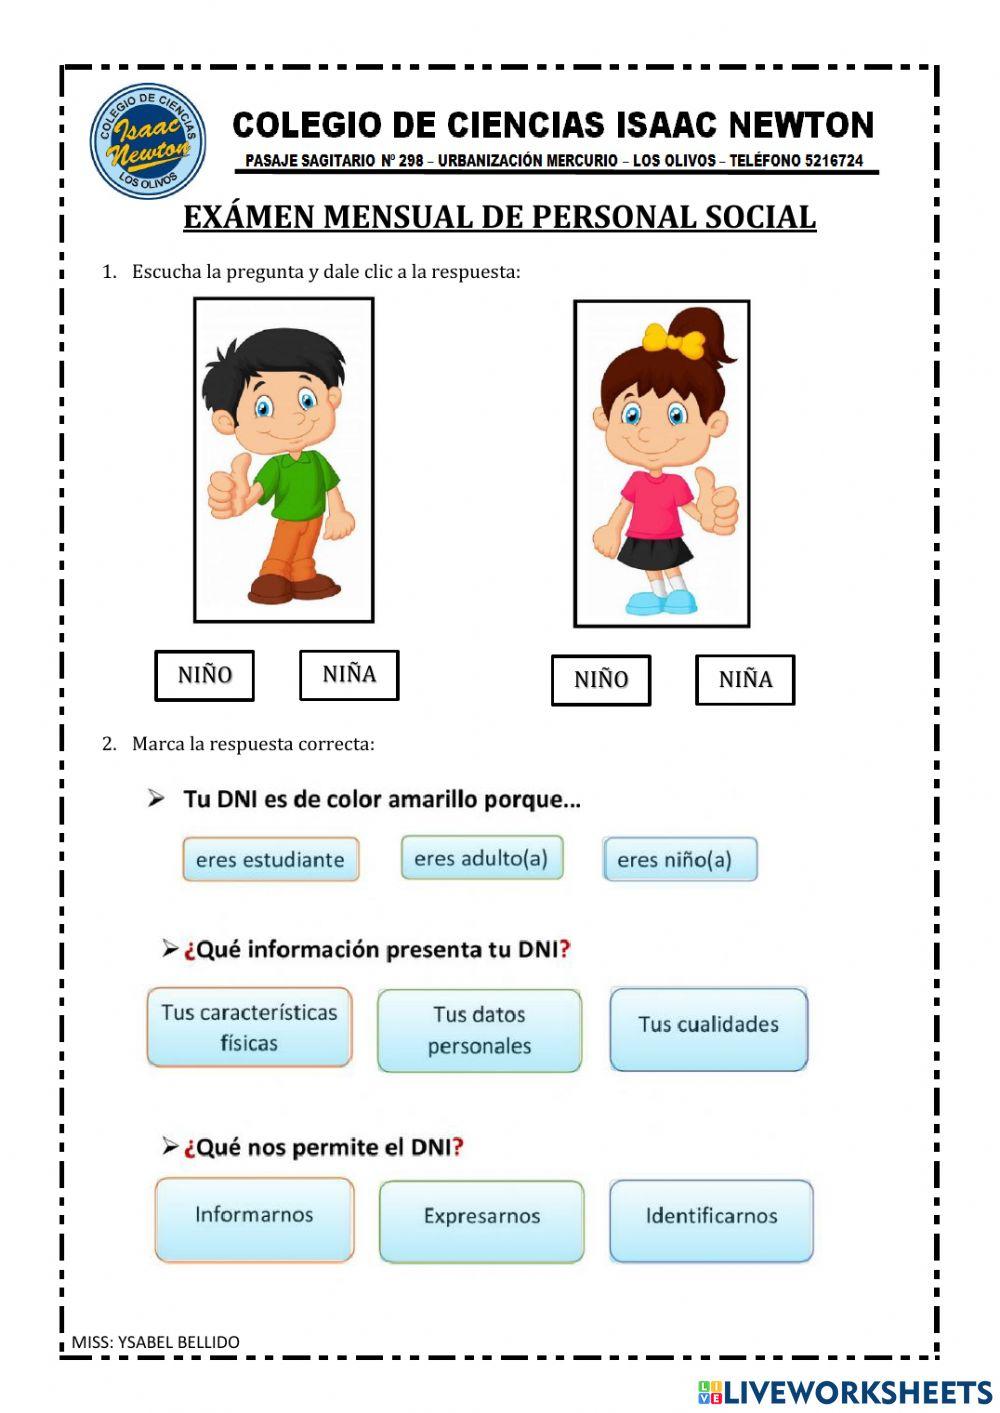 Examen Mensual de Personal Social